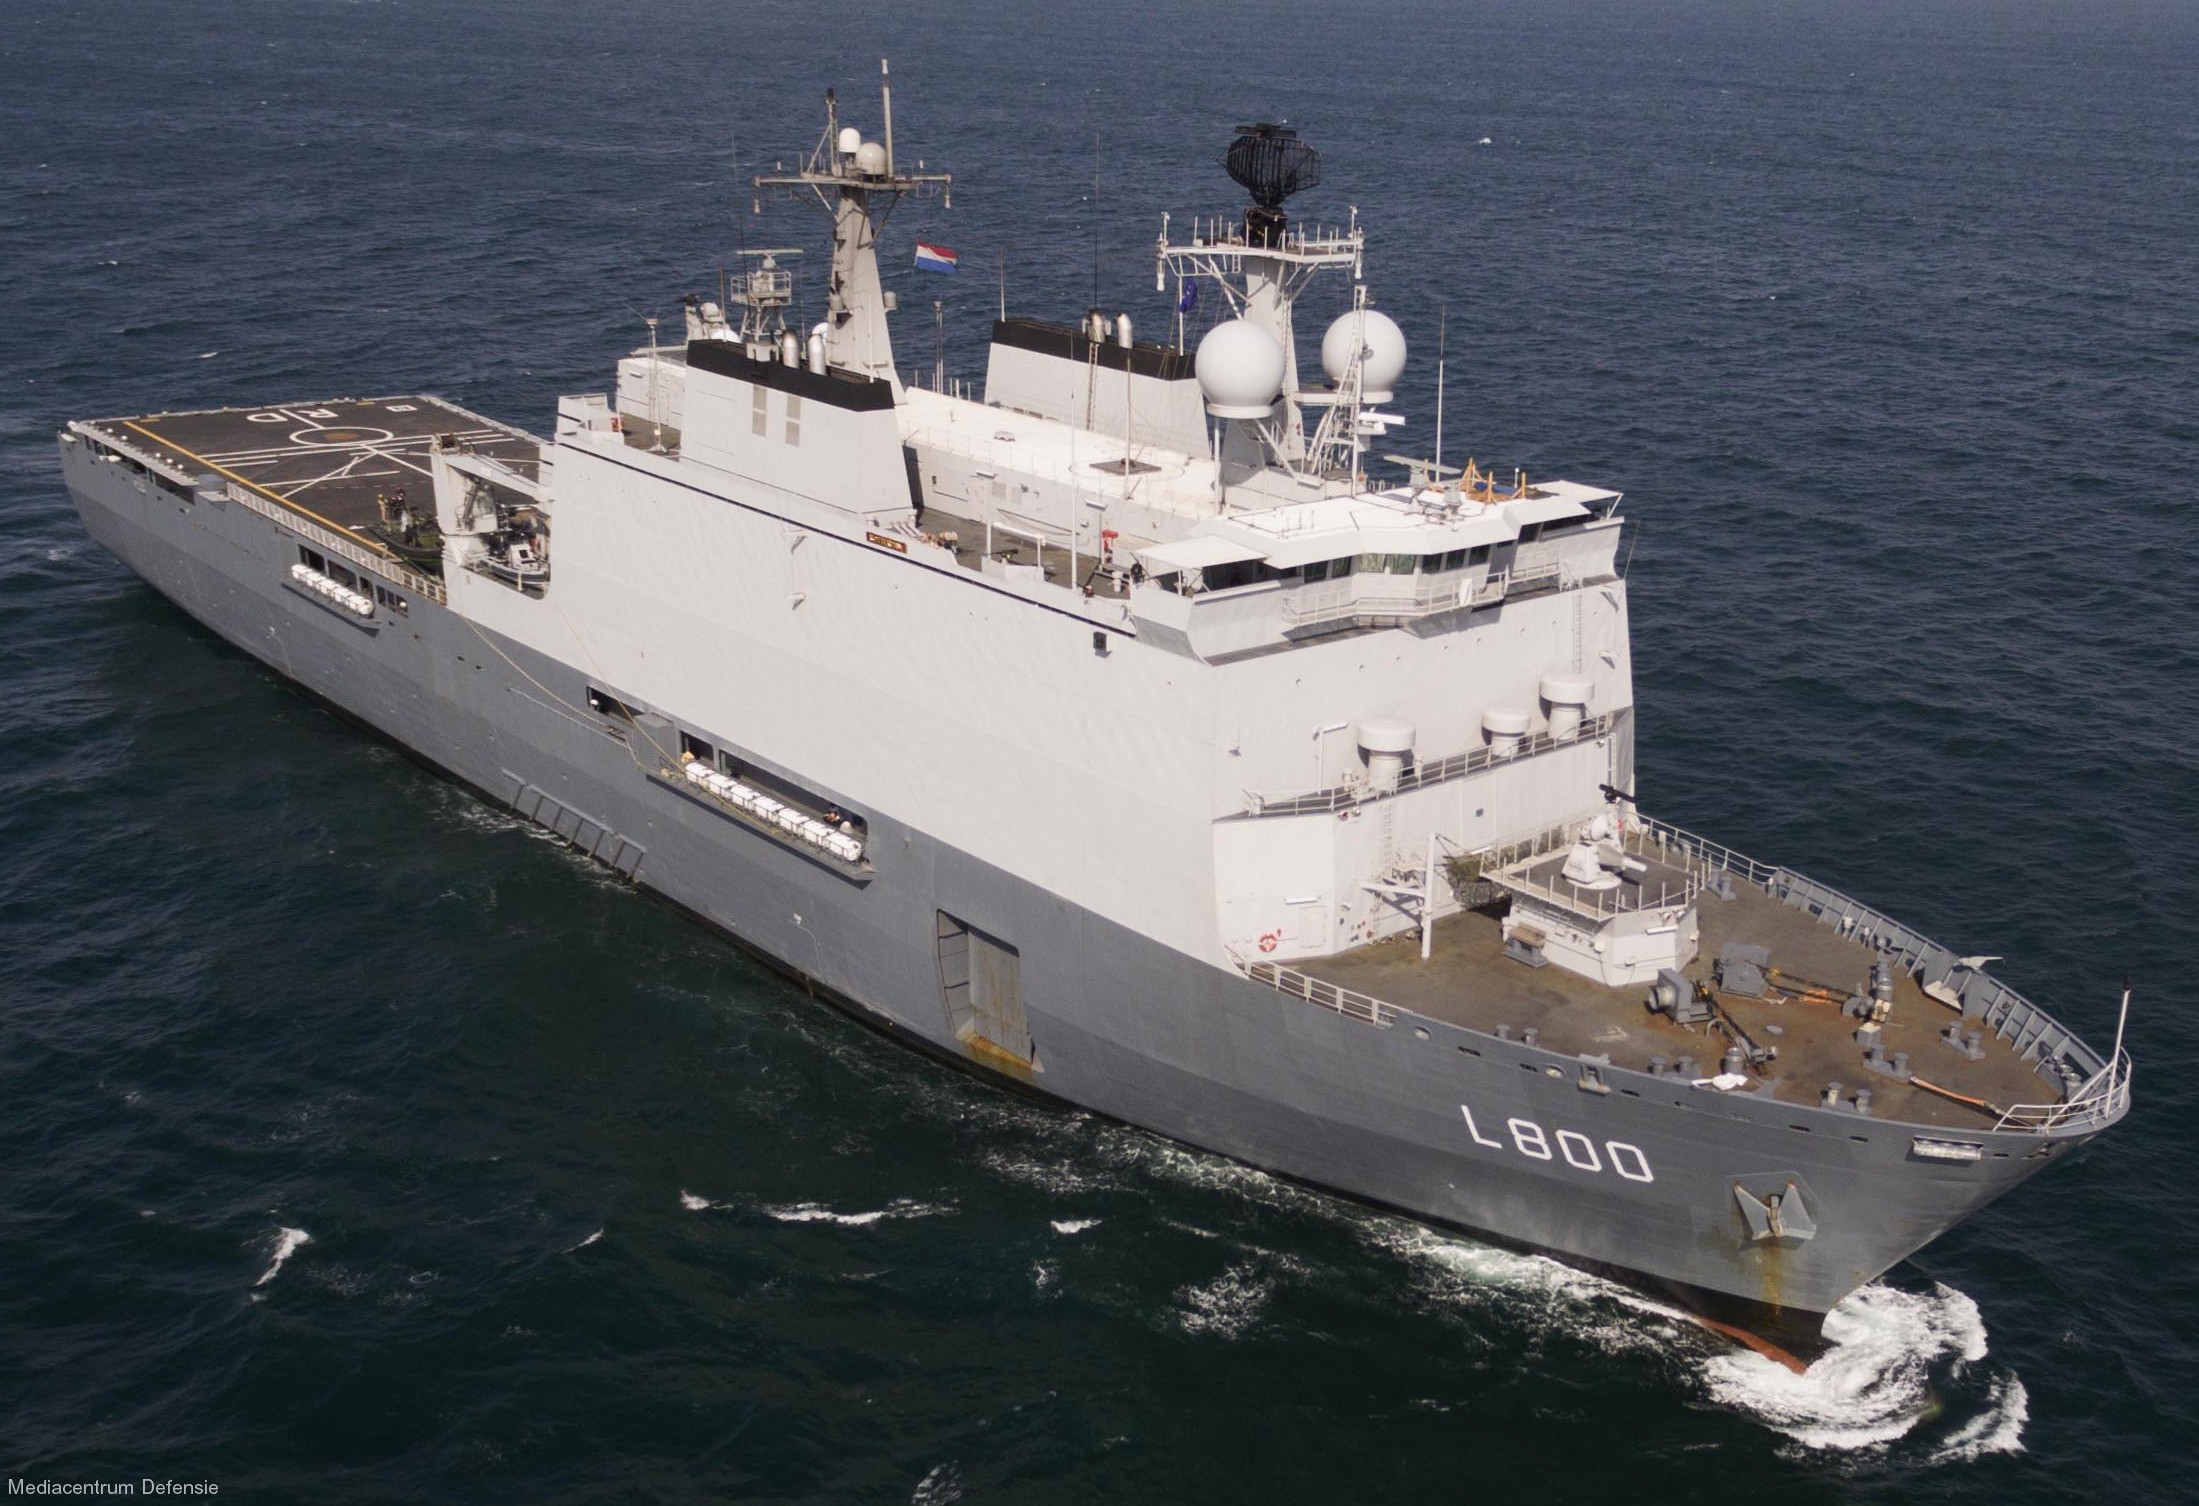 l-800 hnlms rotterdam amphibious landing ship dock lpd royal netherlands navy 23